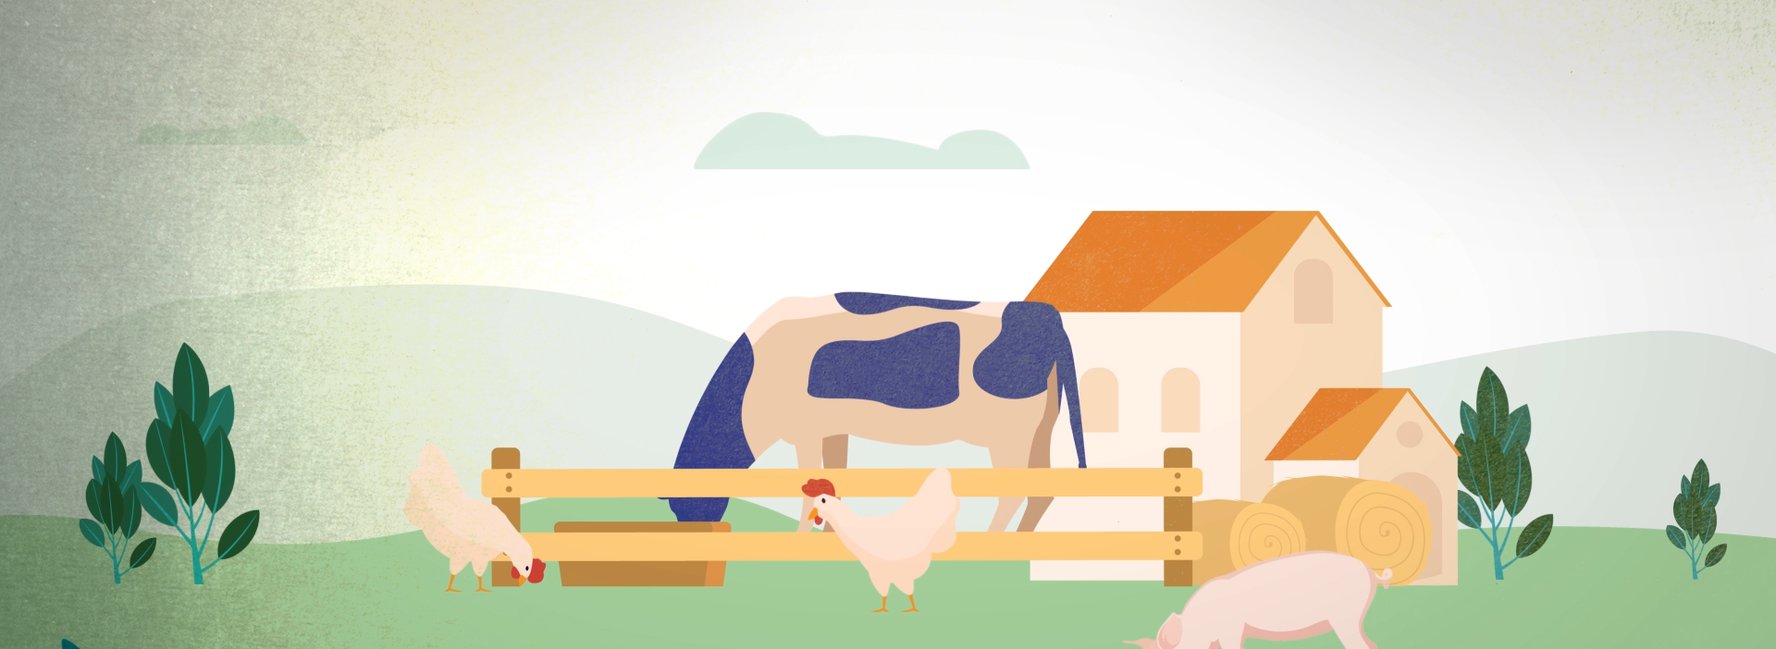 Animation of animals on a farm